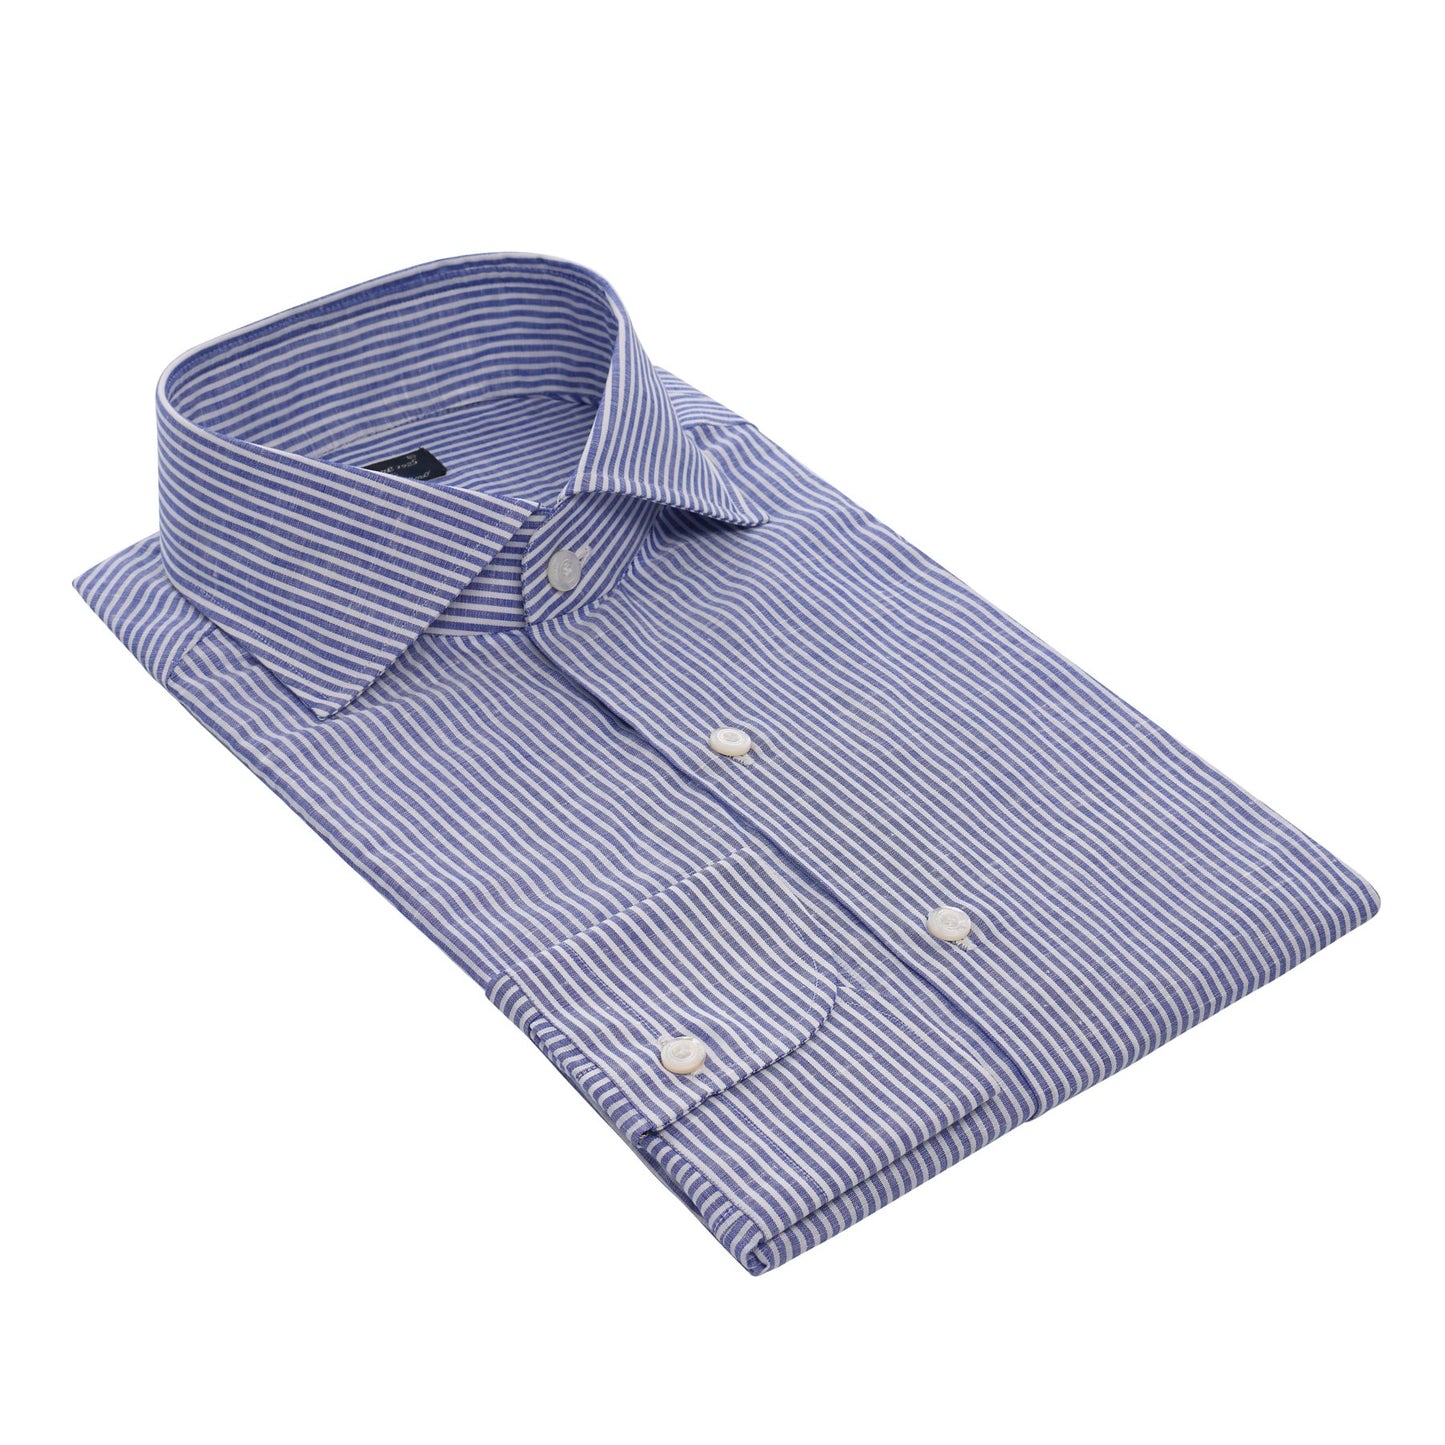 Finamore Striped Cotton and Linen Blue and White Napoli Shirt - SARTALE